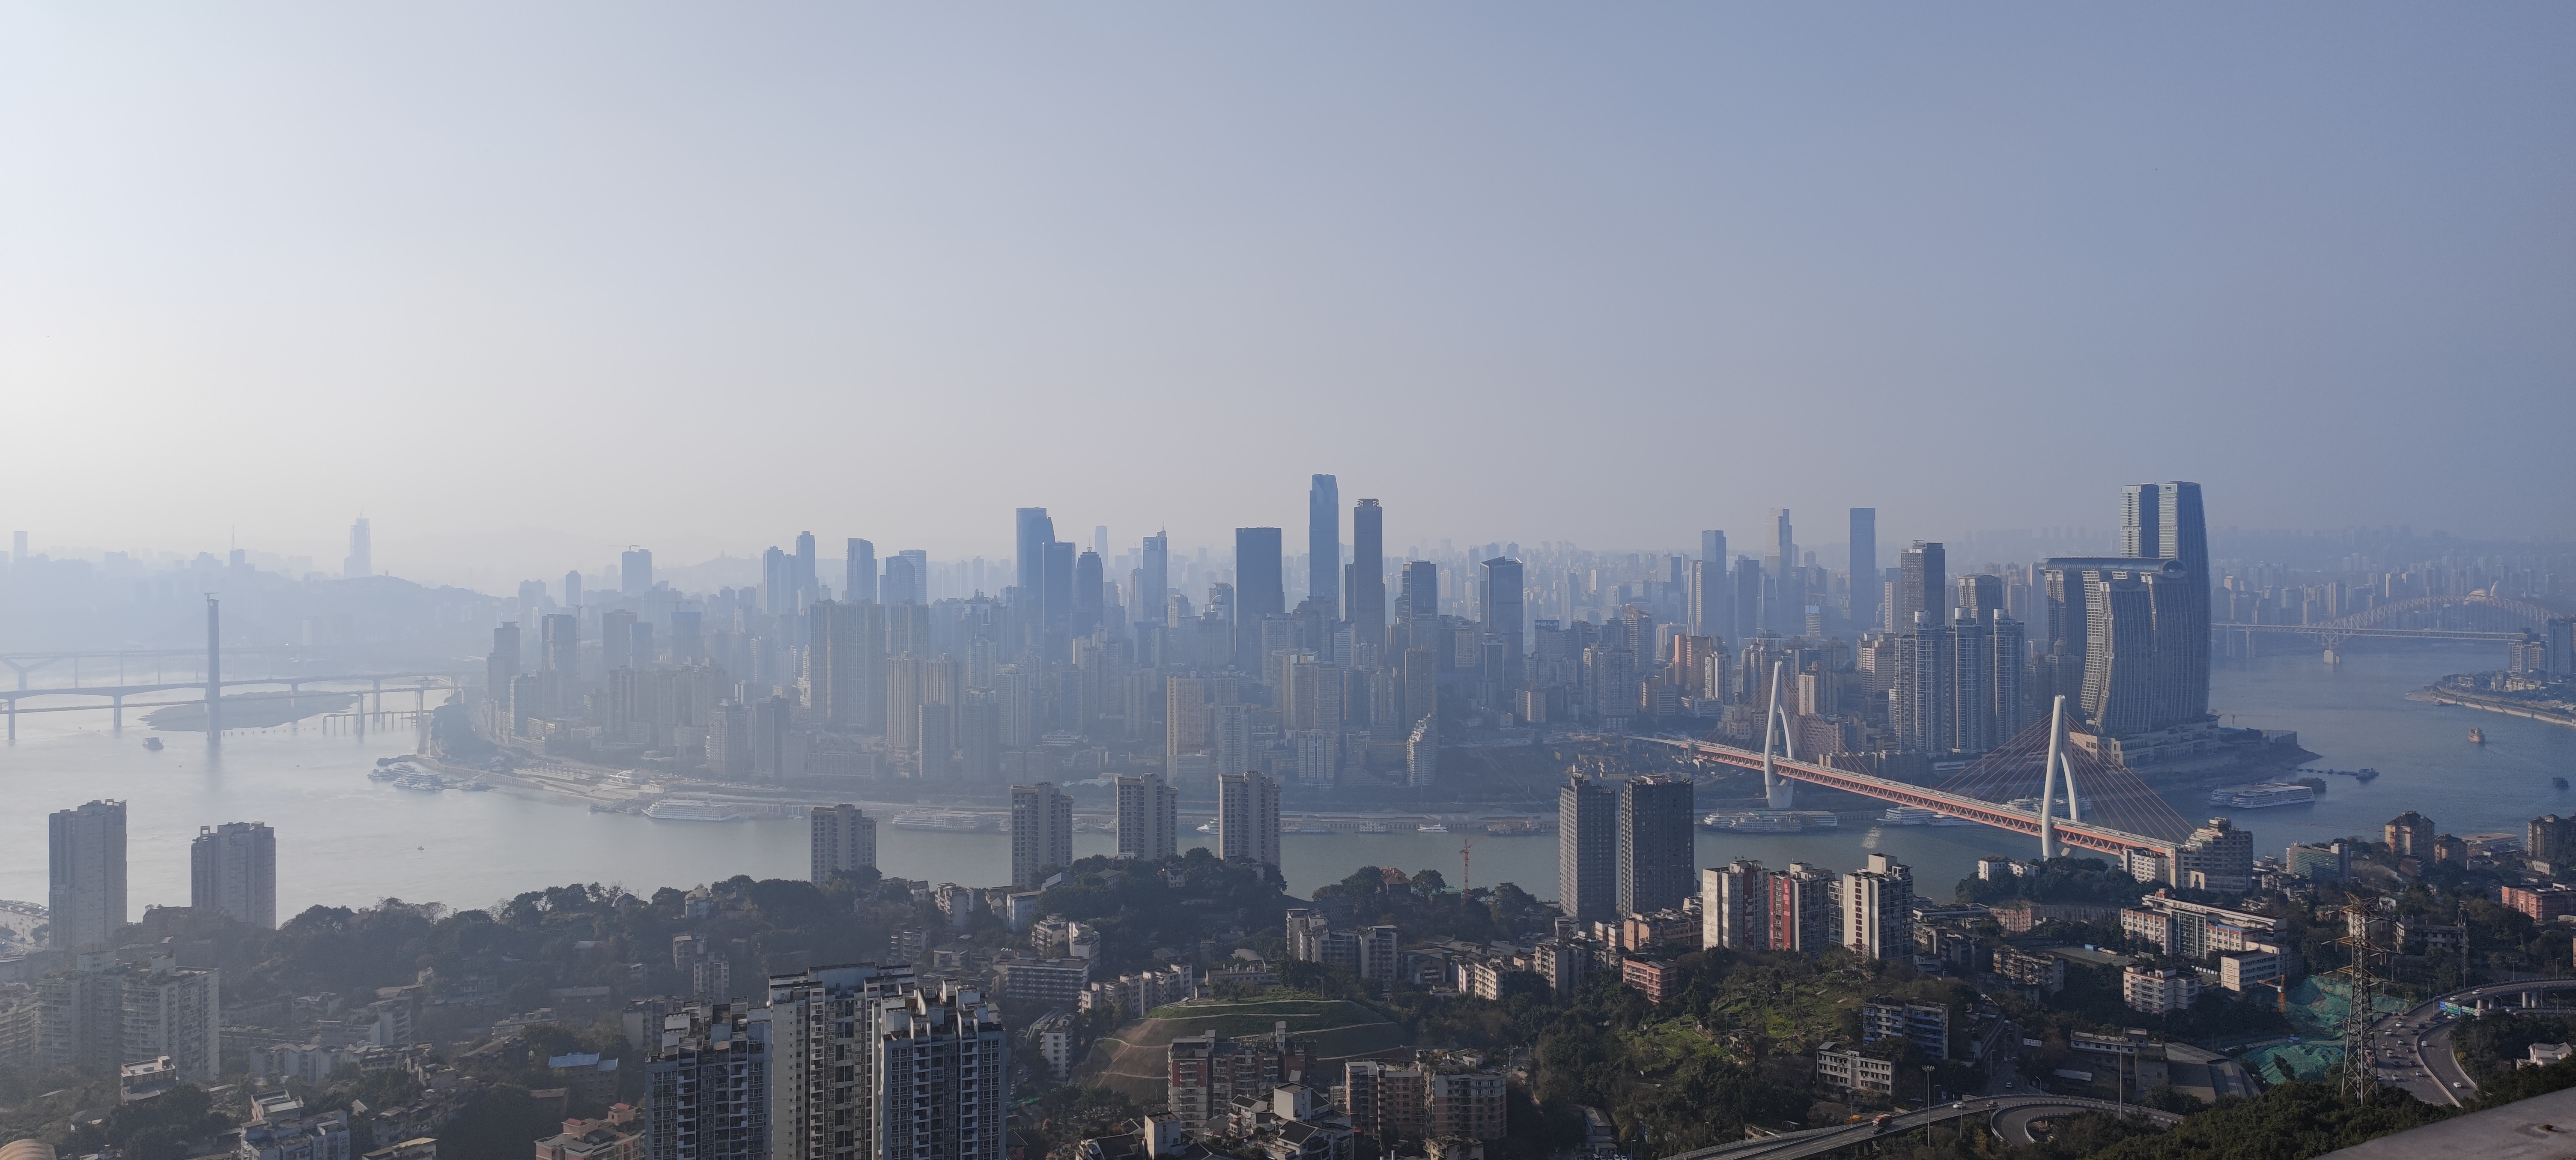 ChongQing China Smog 6016x2708